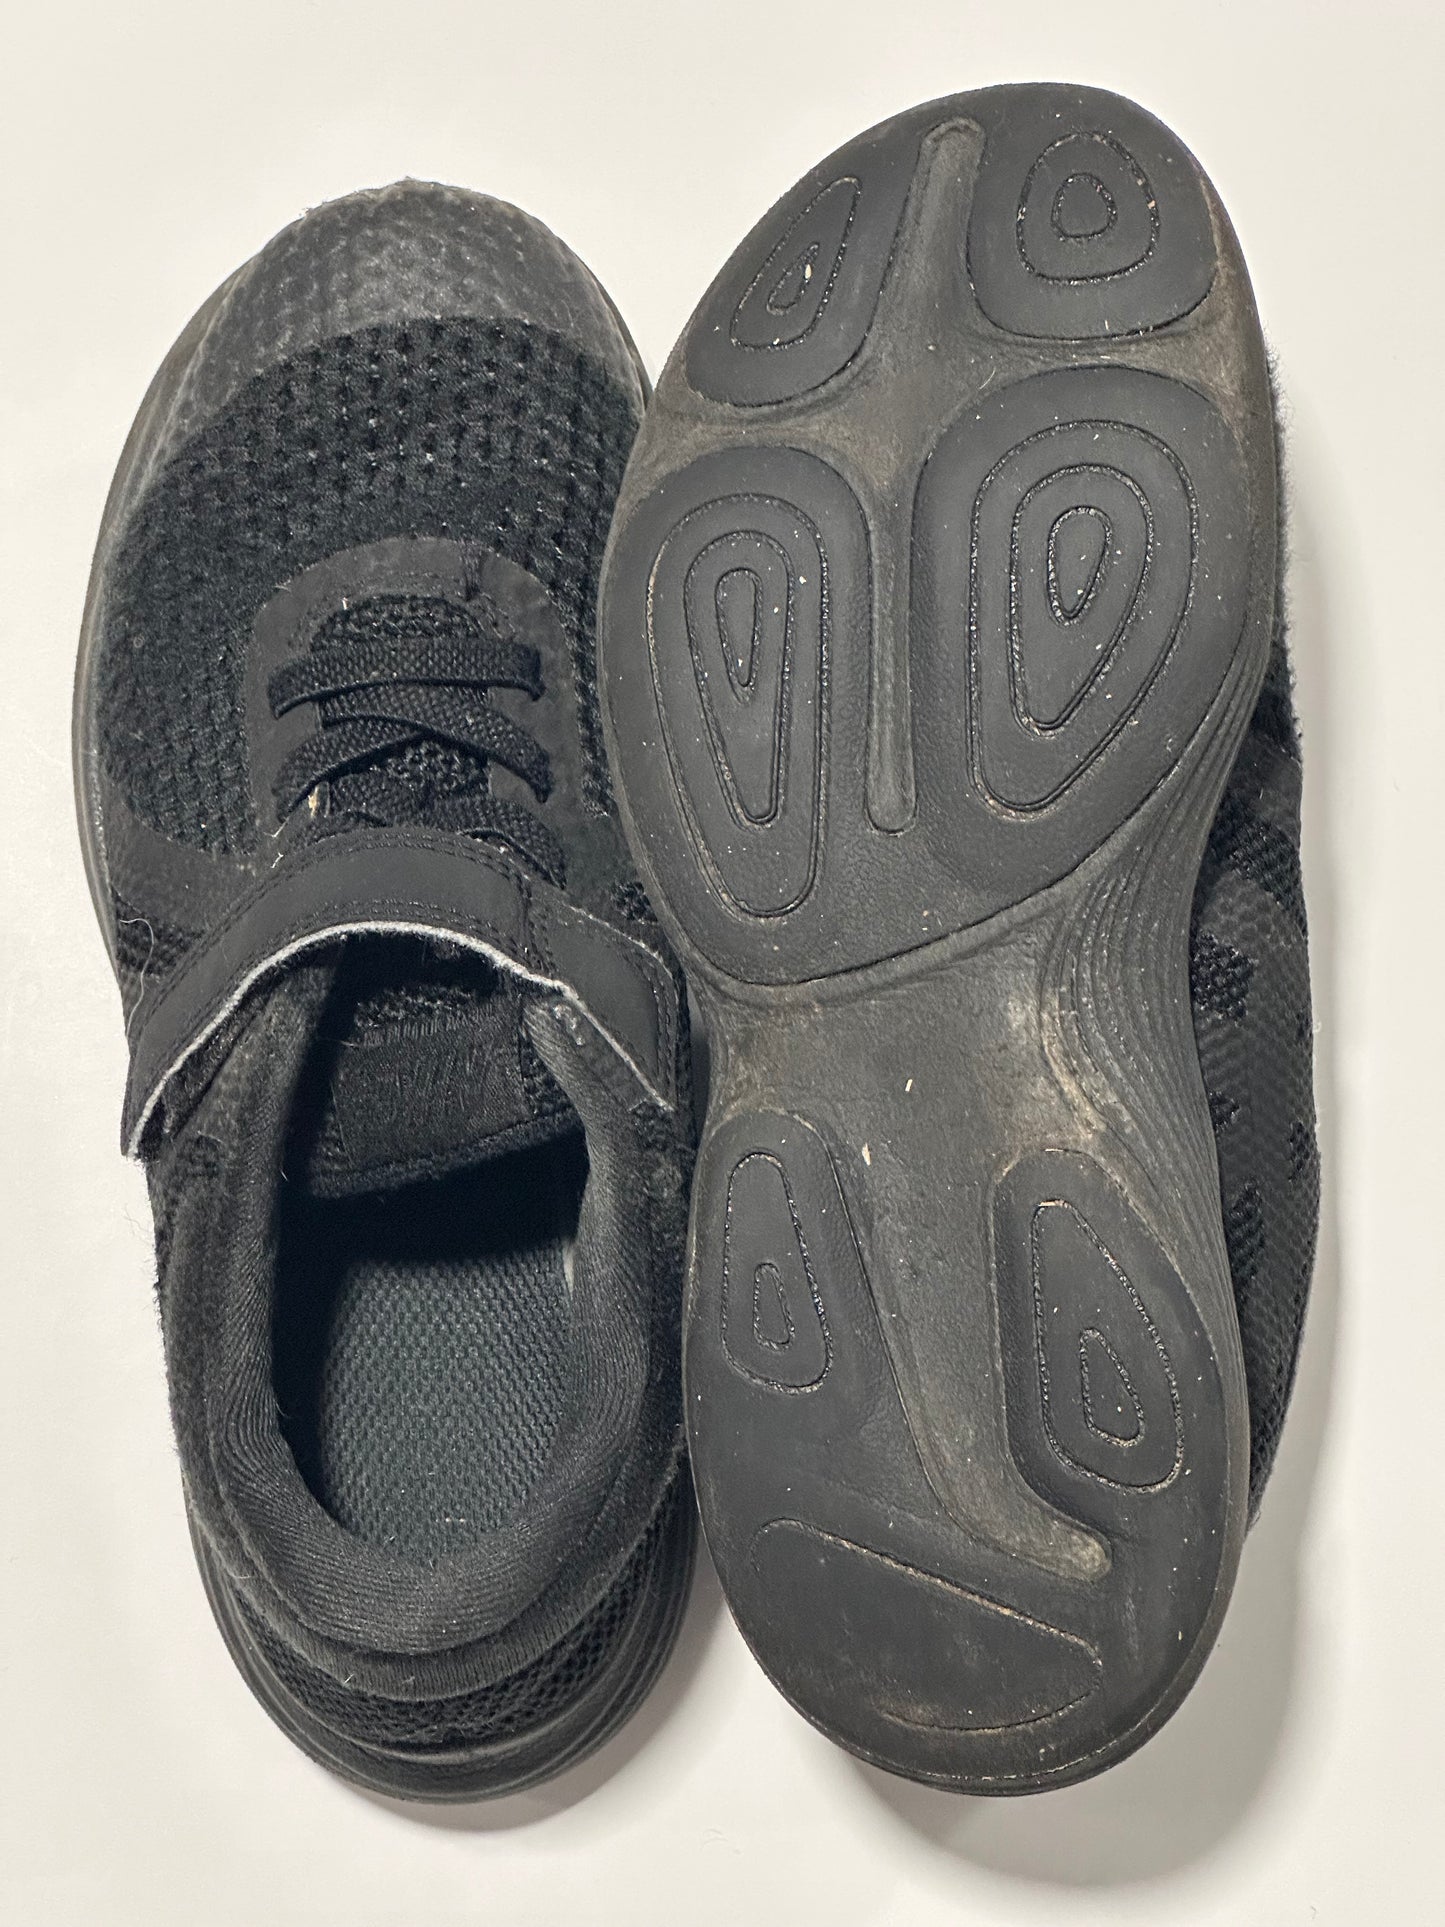 Black Nike sneakers - GUC - size 13.5C